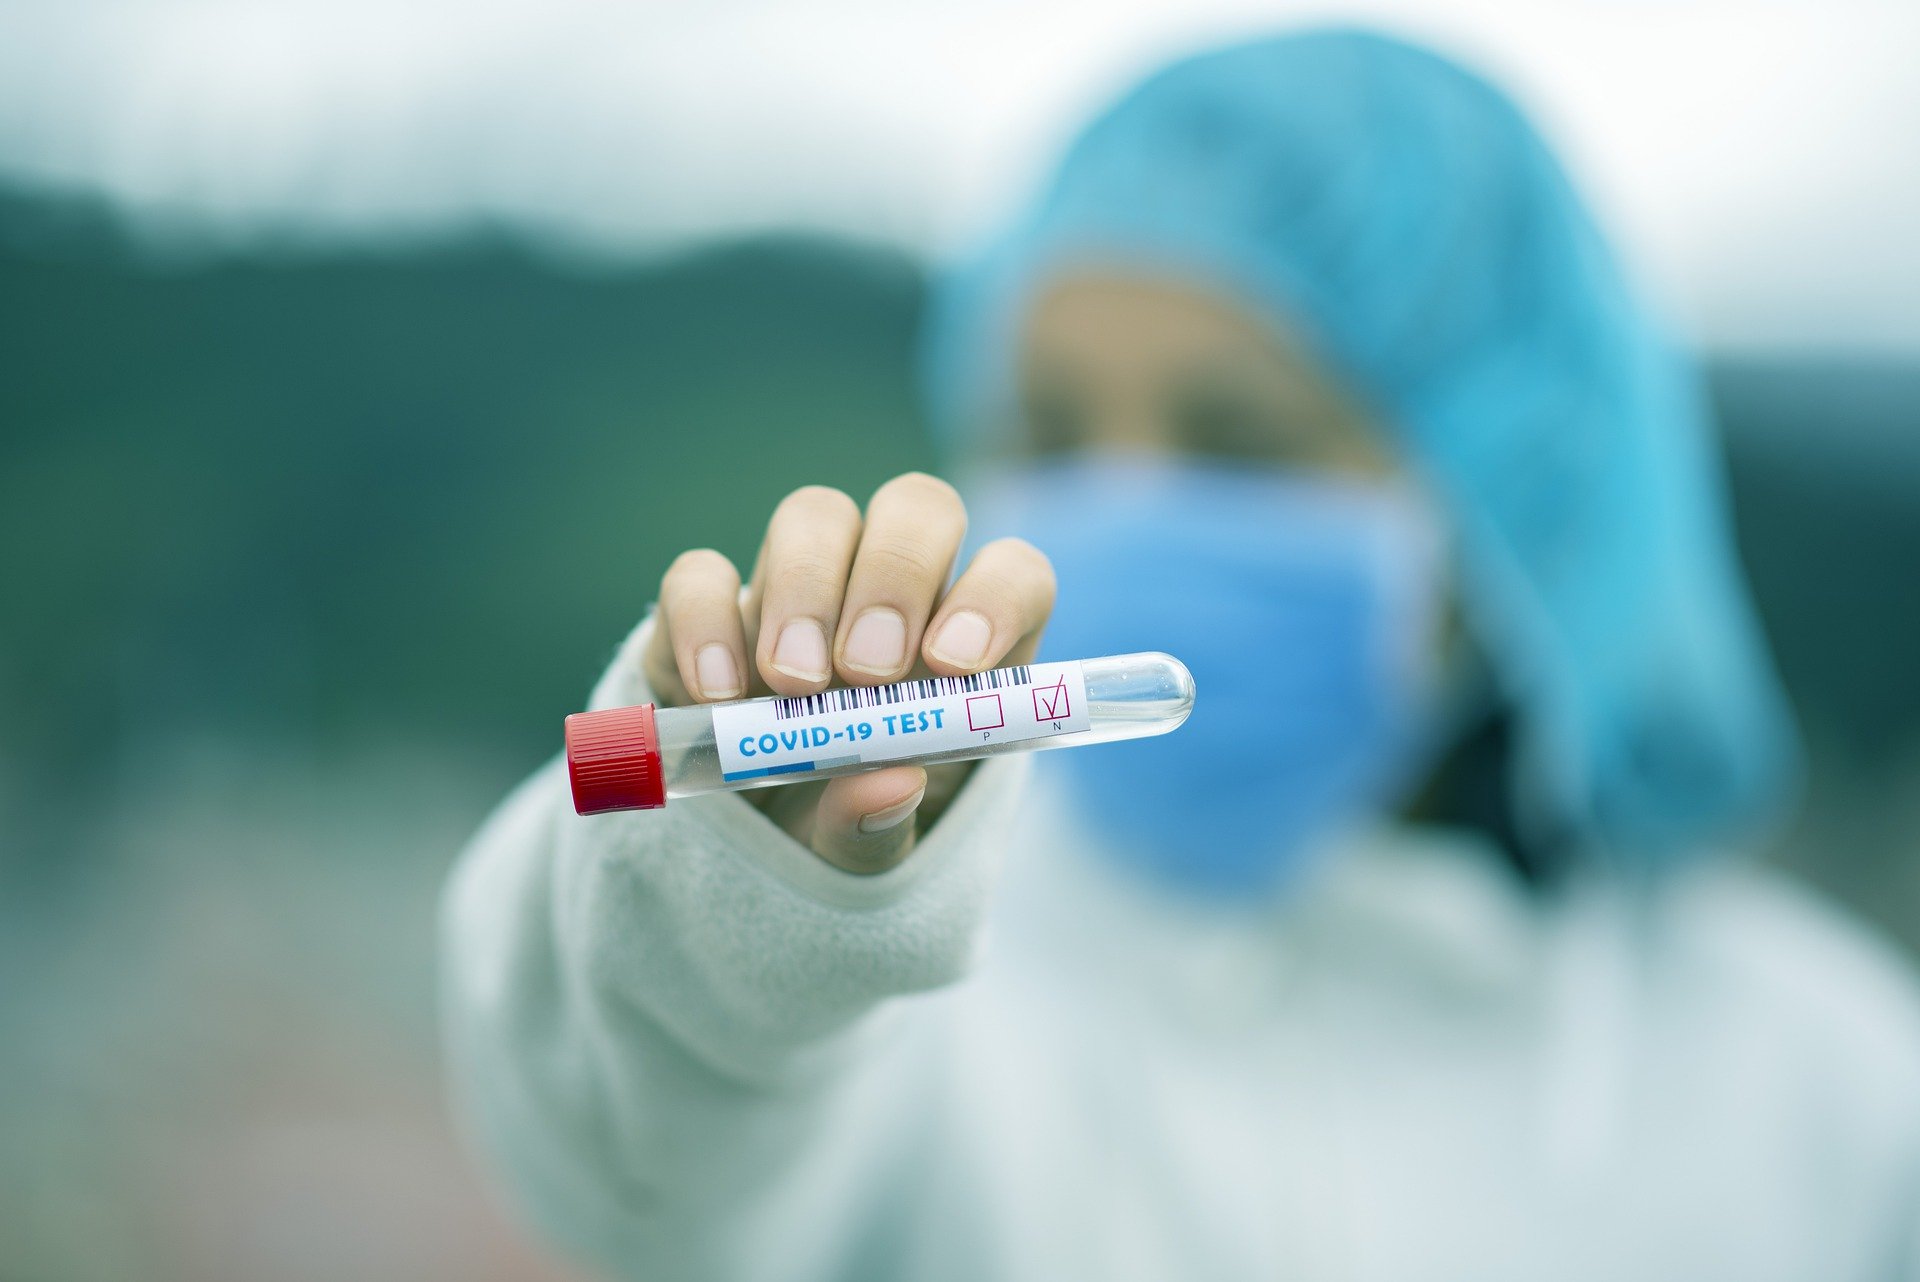 Coronavirus, in Toscana 16 nuovi casi